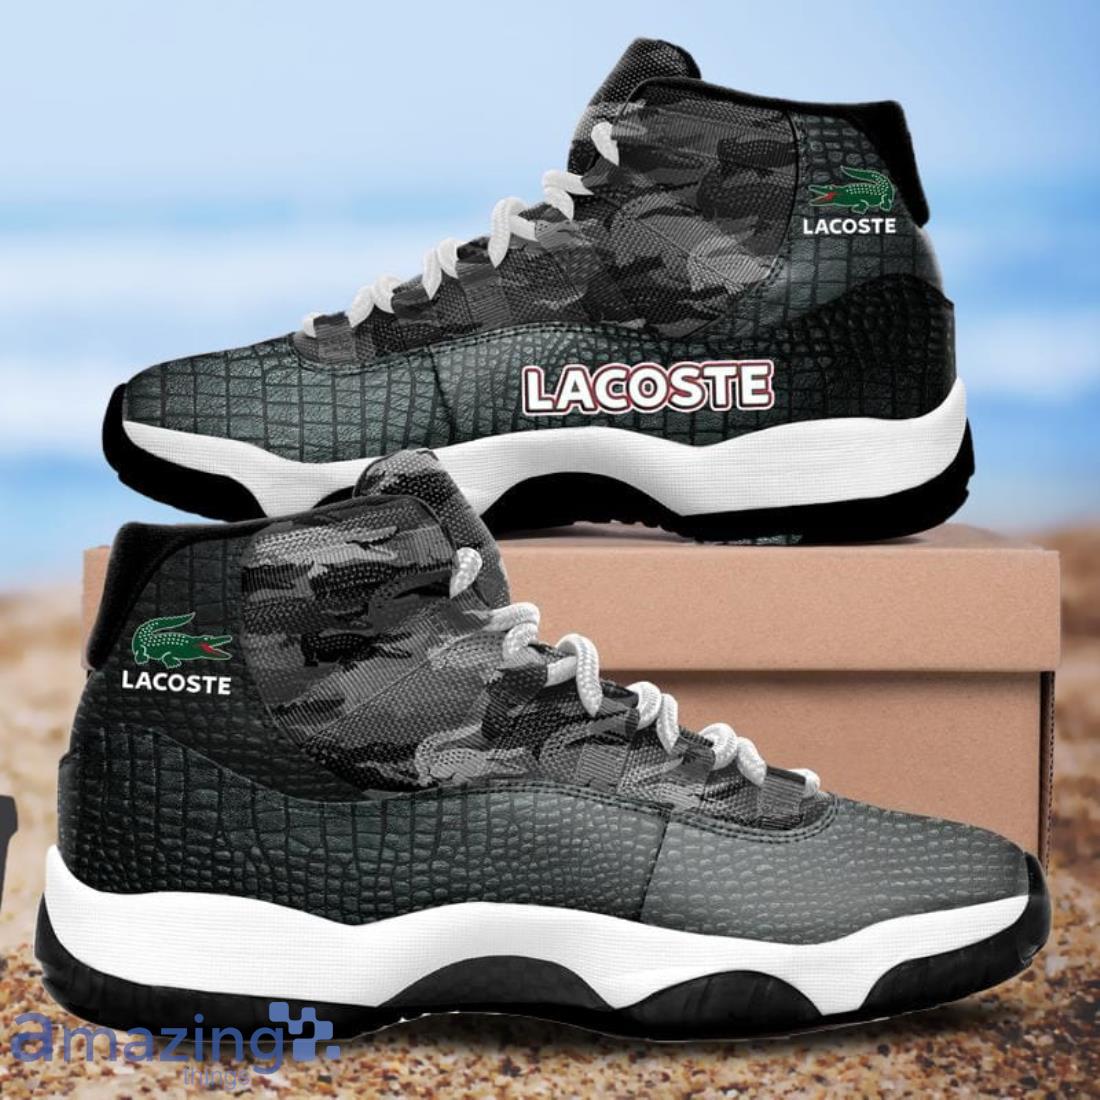 Lacoste For Lacoste Air Jordan 11